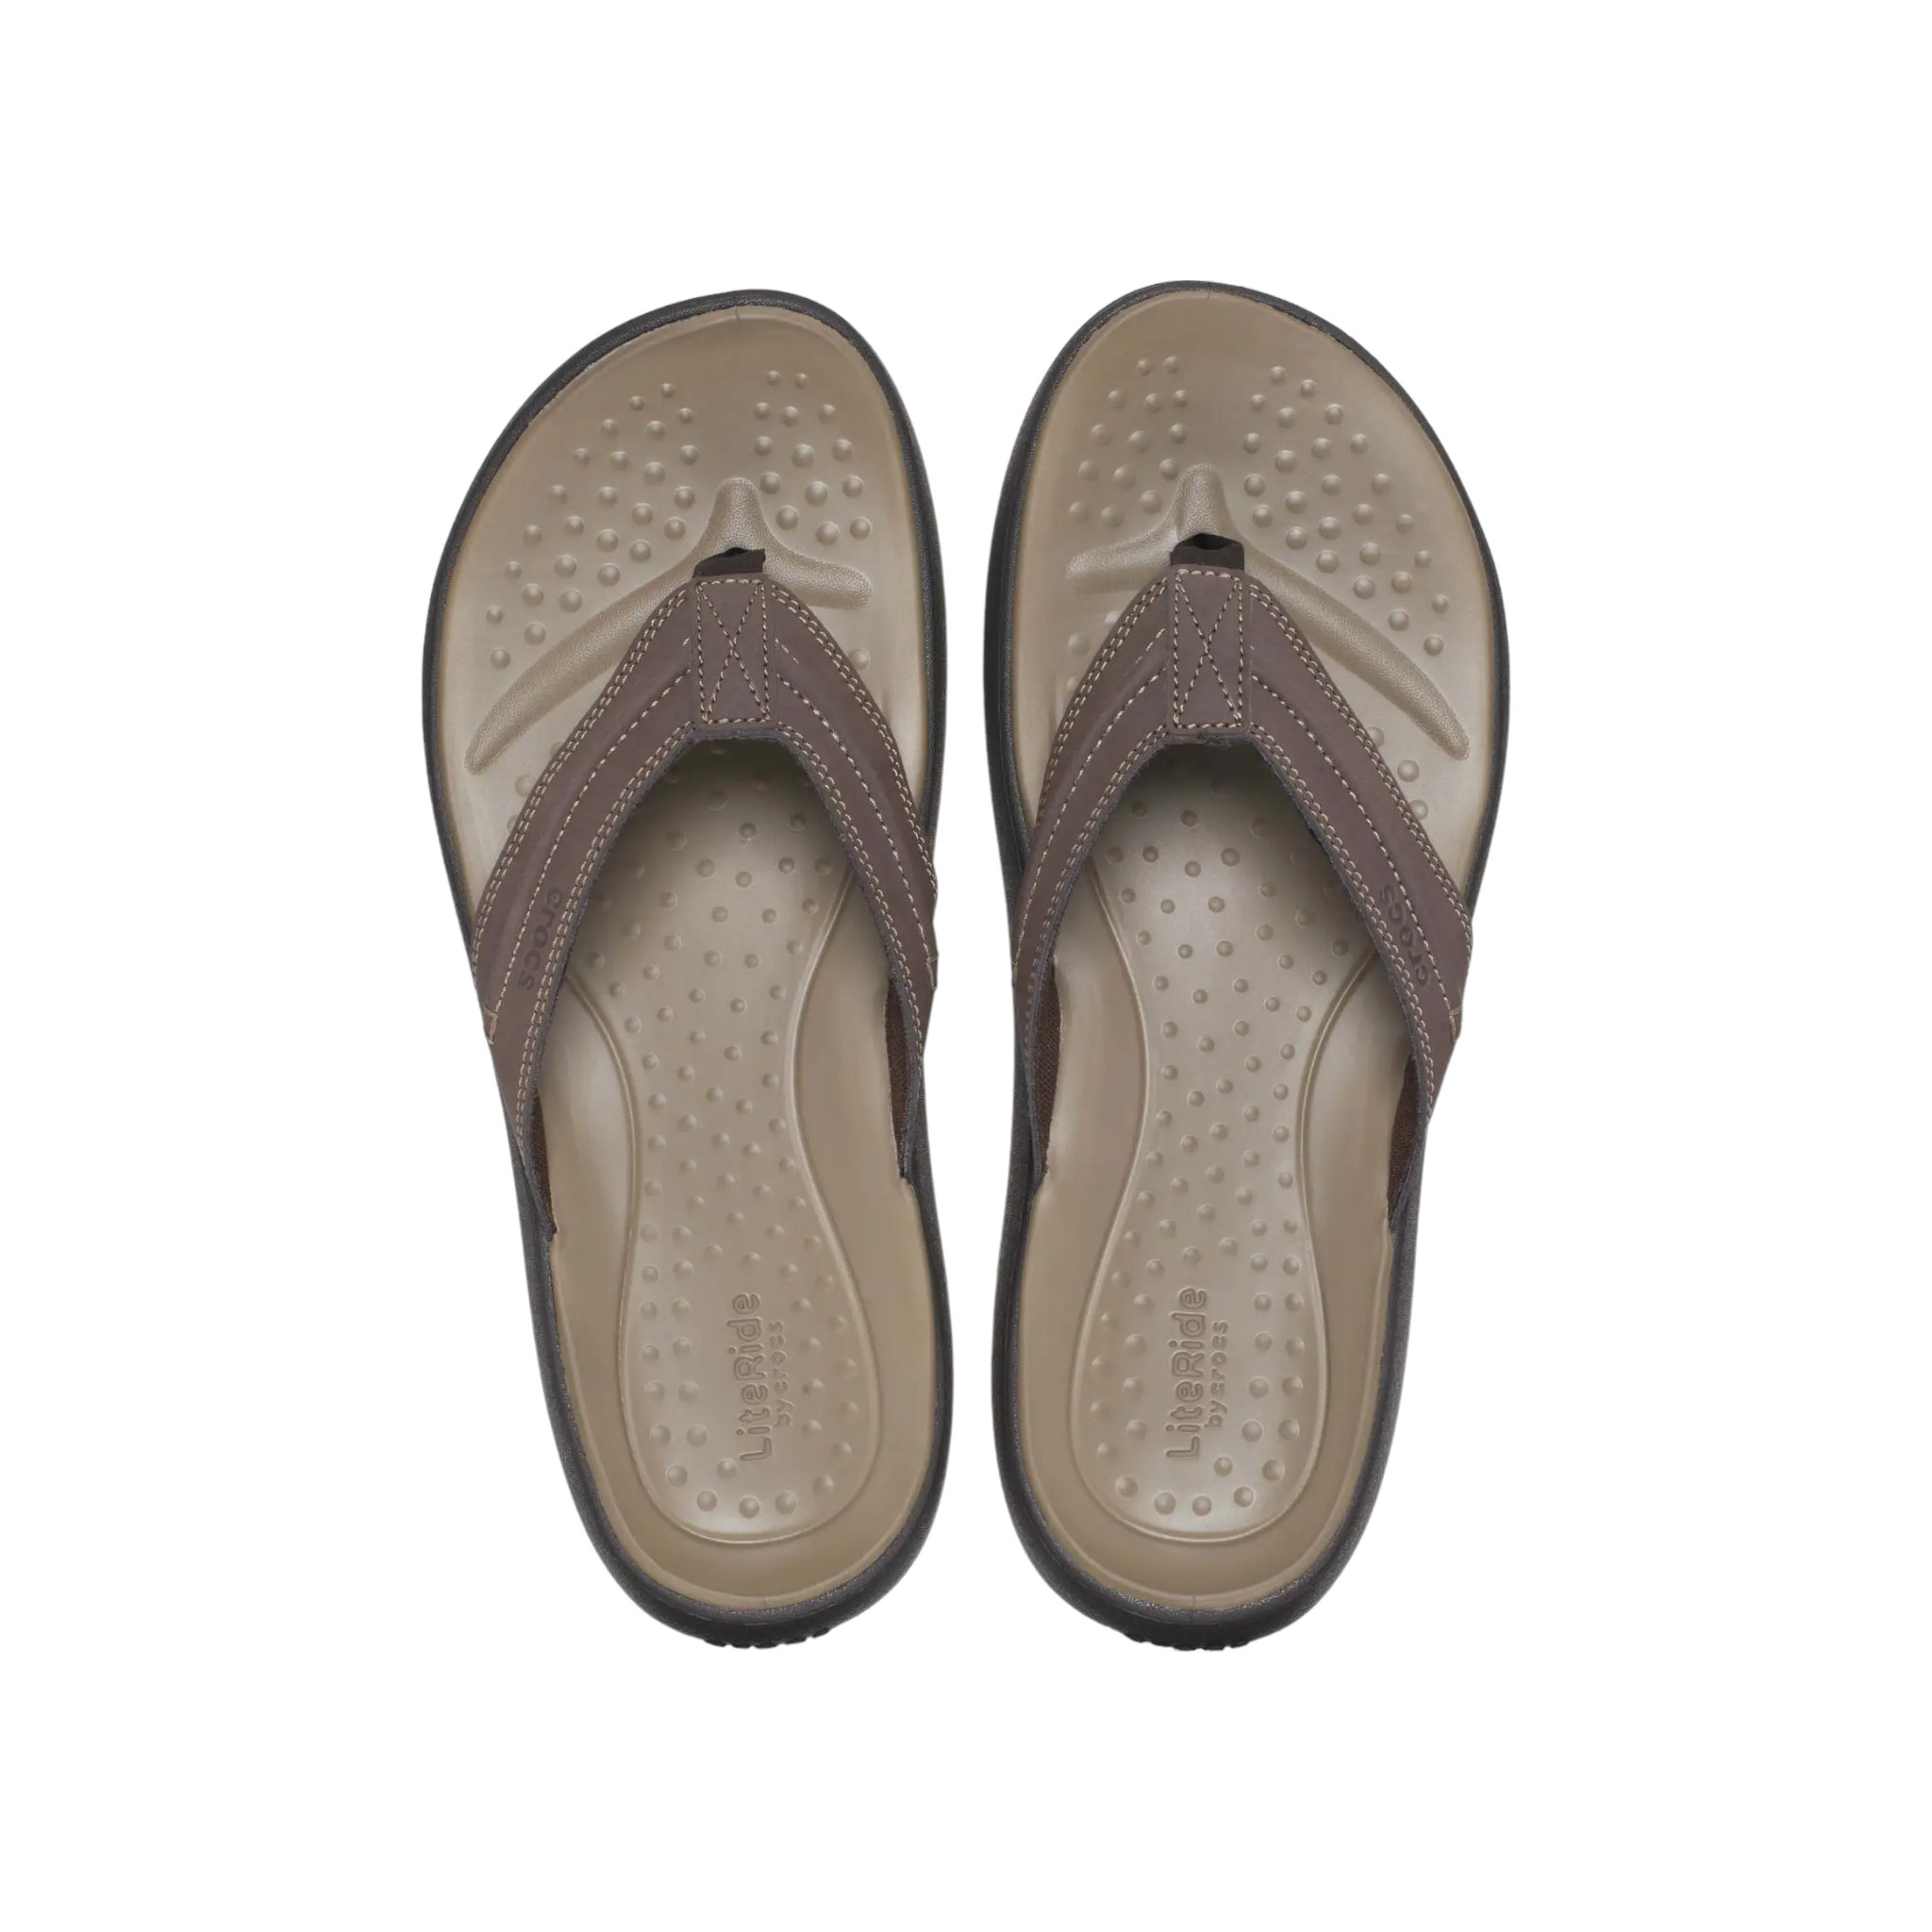 Yukon Vista II Literide Flip - shoe&amp;me - Crocs - Jandals - Jandal, Mens, Summer